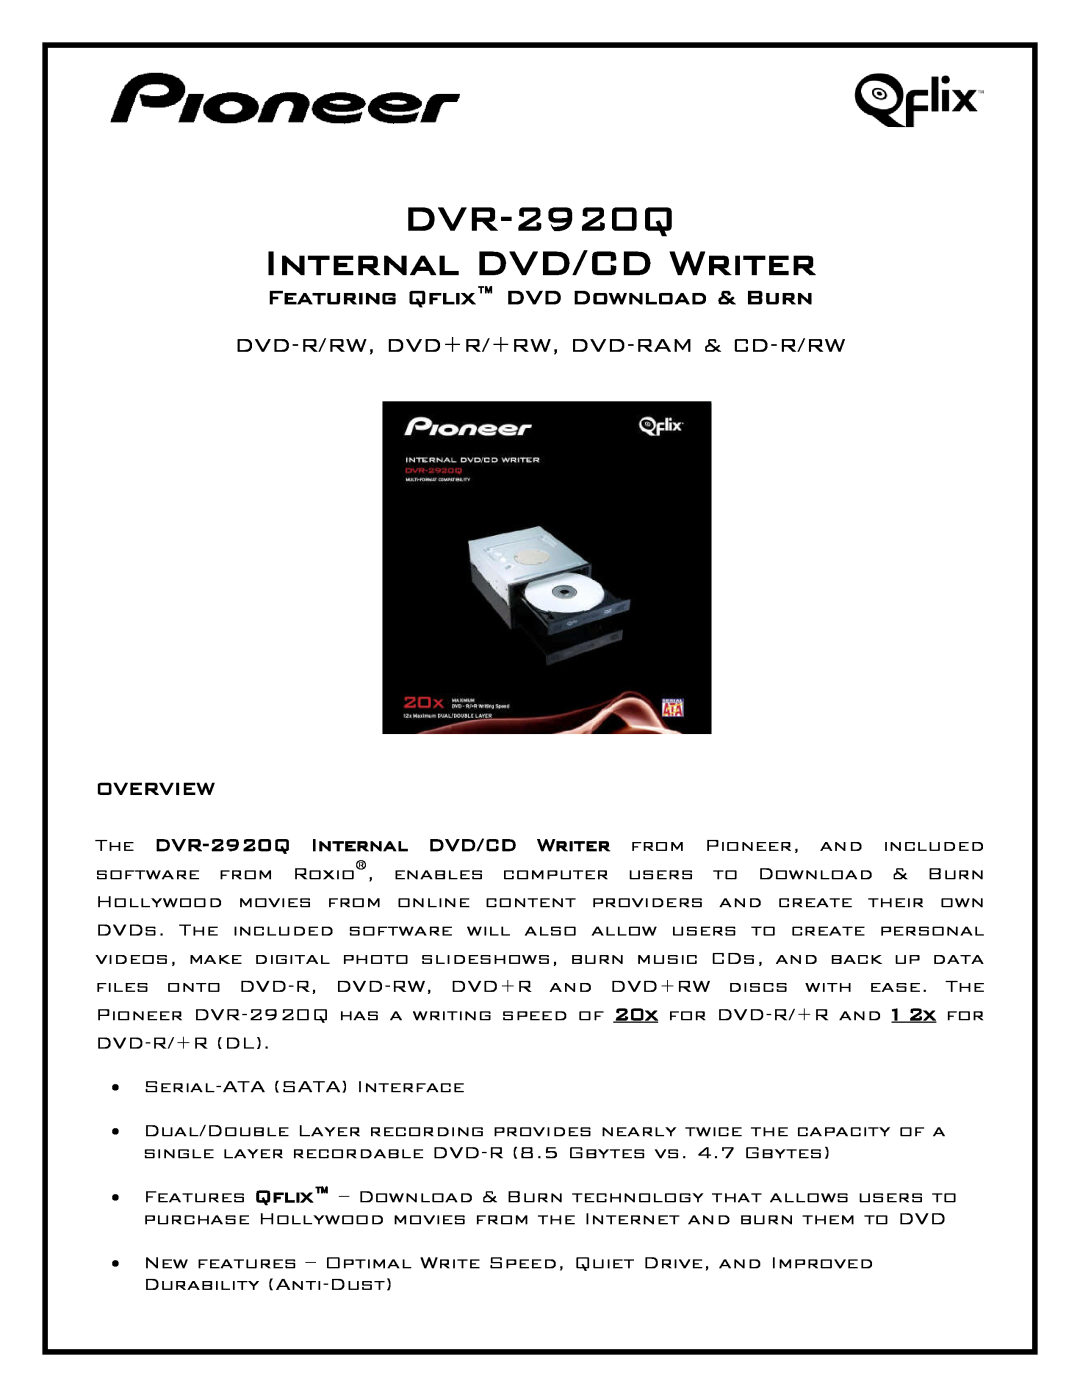 Pioneer DVR-2920Q manual Featuring Qflix DVD Download & Burn, Dvd-R/Rw, Dvd+R/+Rw, Dvd-Ram & Cd-R/Rw, Overview 